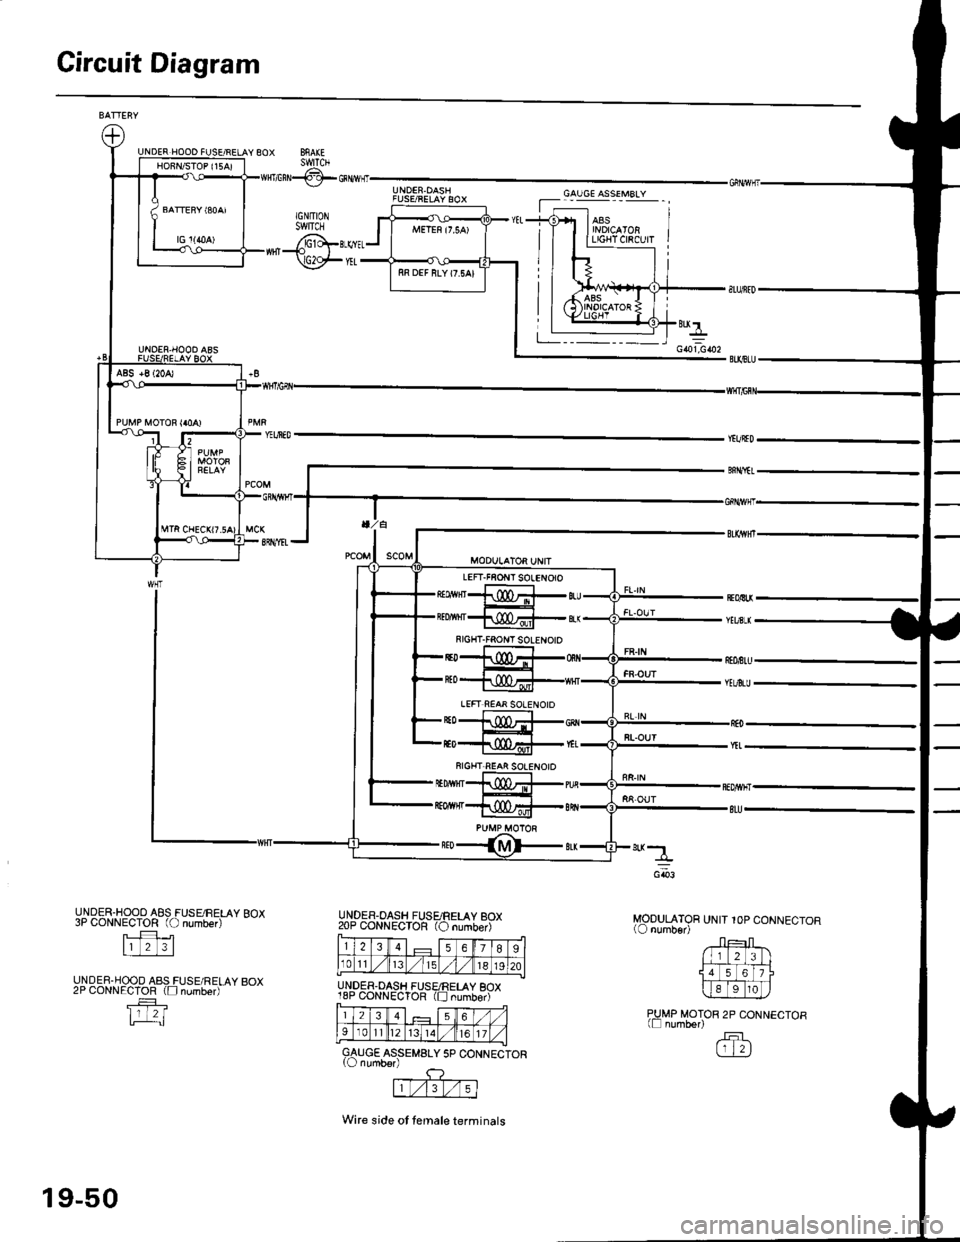 HONDA CIVIC 1996 6.G Service Manual Gircuit Diagram
MOOULATOR UNIT IOP CONNECTOR
zrJrF!_lll 2 3ll
14TiEltl
c@4
PIMP MOTOR 2P CONNECTOR(Ll number)fFlGTN
UNDER.HOOO A8S FUSE,/FELAY BOX3P CONNECTOR (O number)
| 2 3l
UNDER.HOOD AAS FUSE/REL